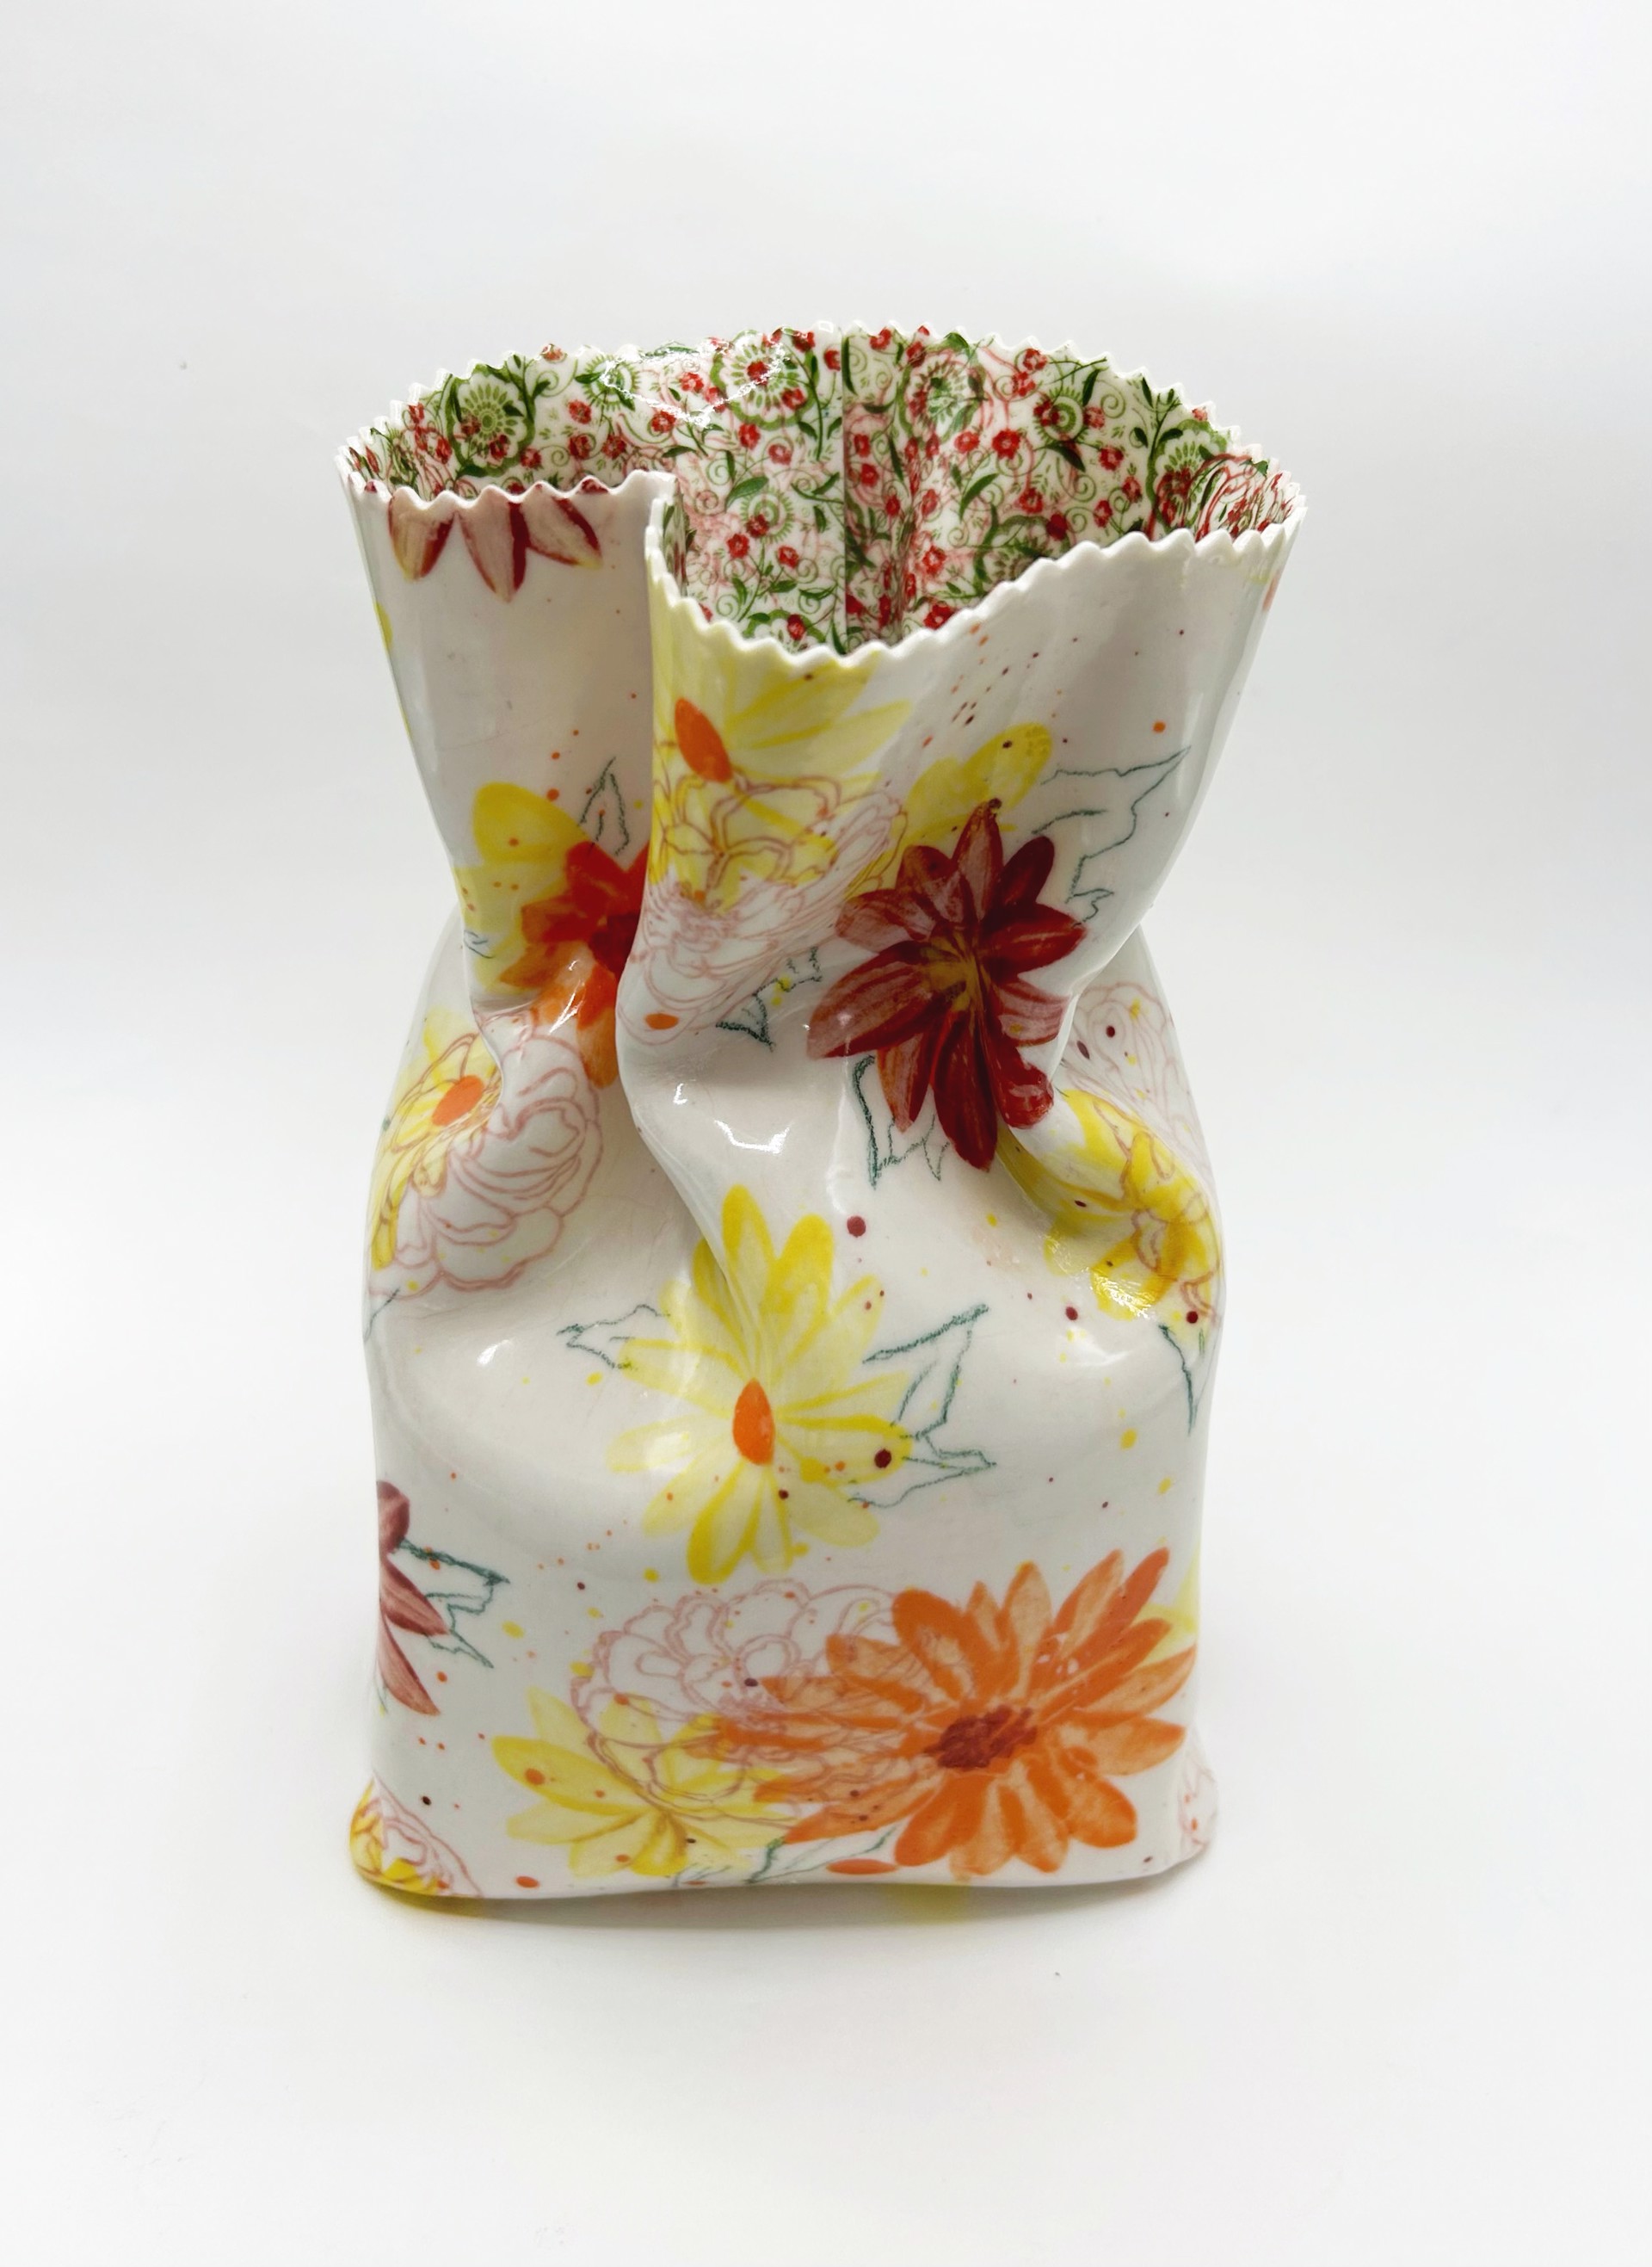 Vase with Flowers by Chandra Beadleston